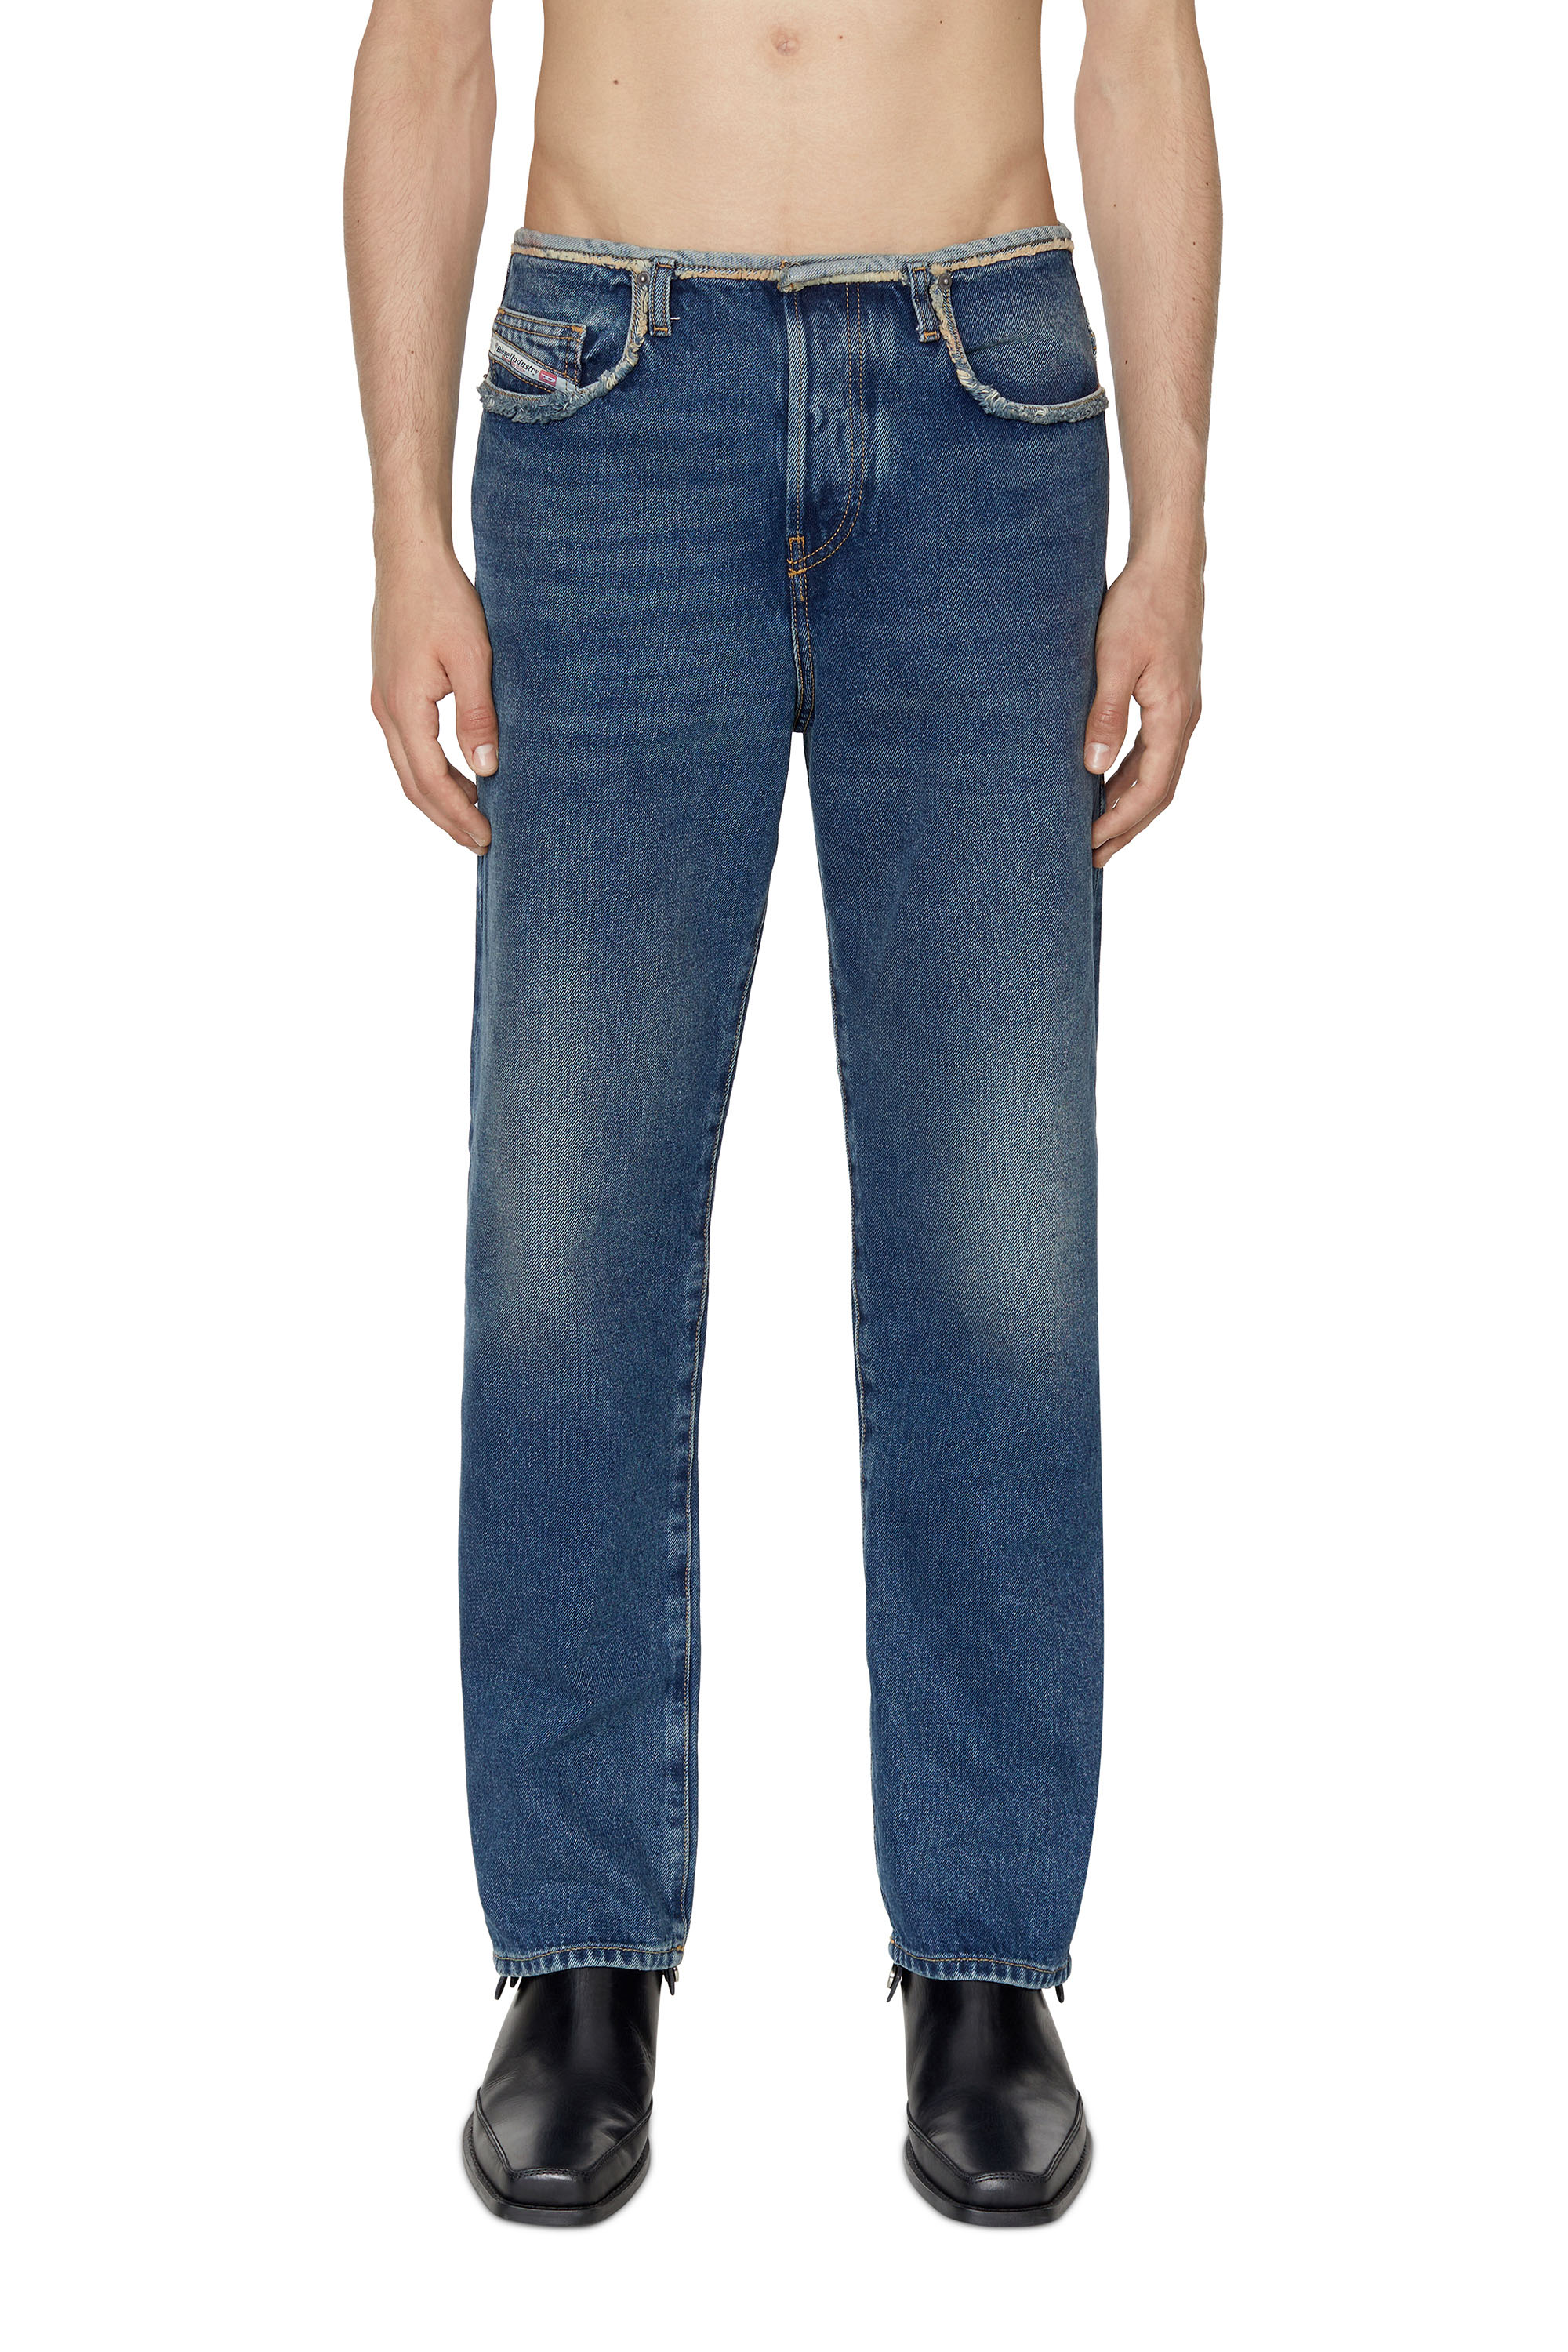 D-Pend 007F2 Straight Jeans, Medium blue - Jeans